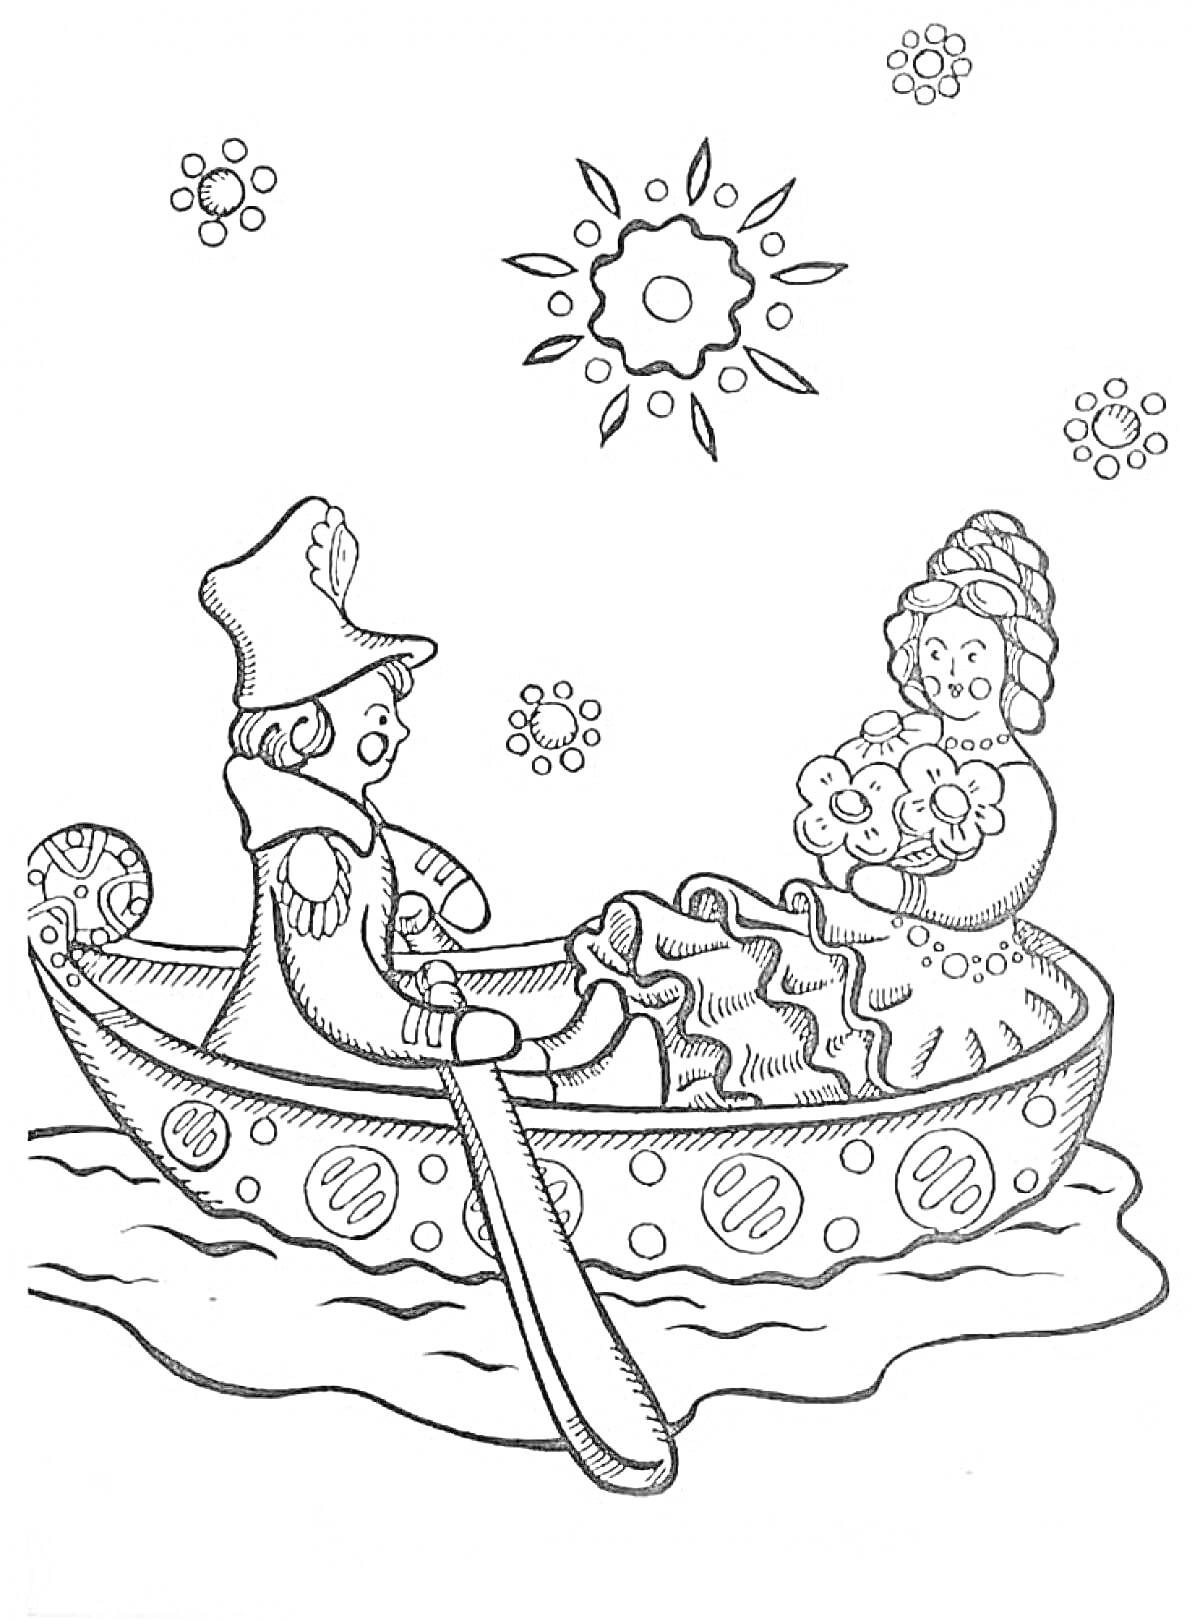 Мужчина в шляпе и женщина в лодке с узором на воде